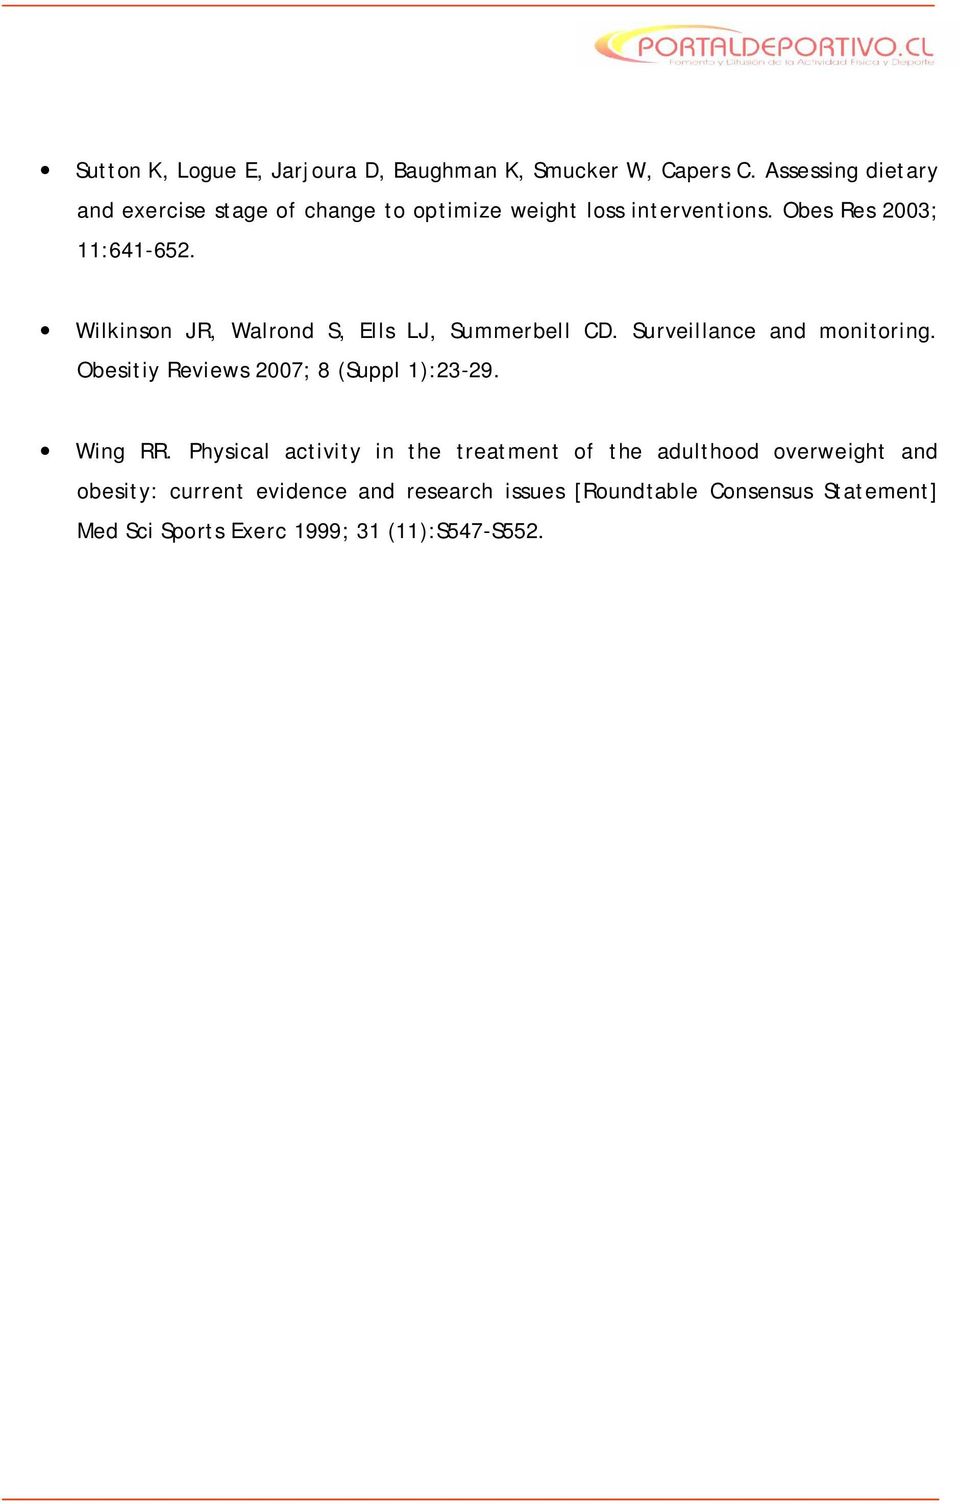 Wilkinson JR, Walrond S, Ells LJ, Summerbell CD. Surveillance and monitoring. Obesitiy Reviews 2007; 8 (Suppl 1):23-29.